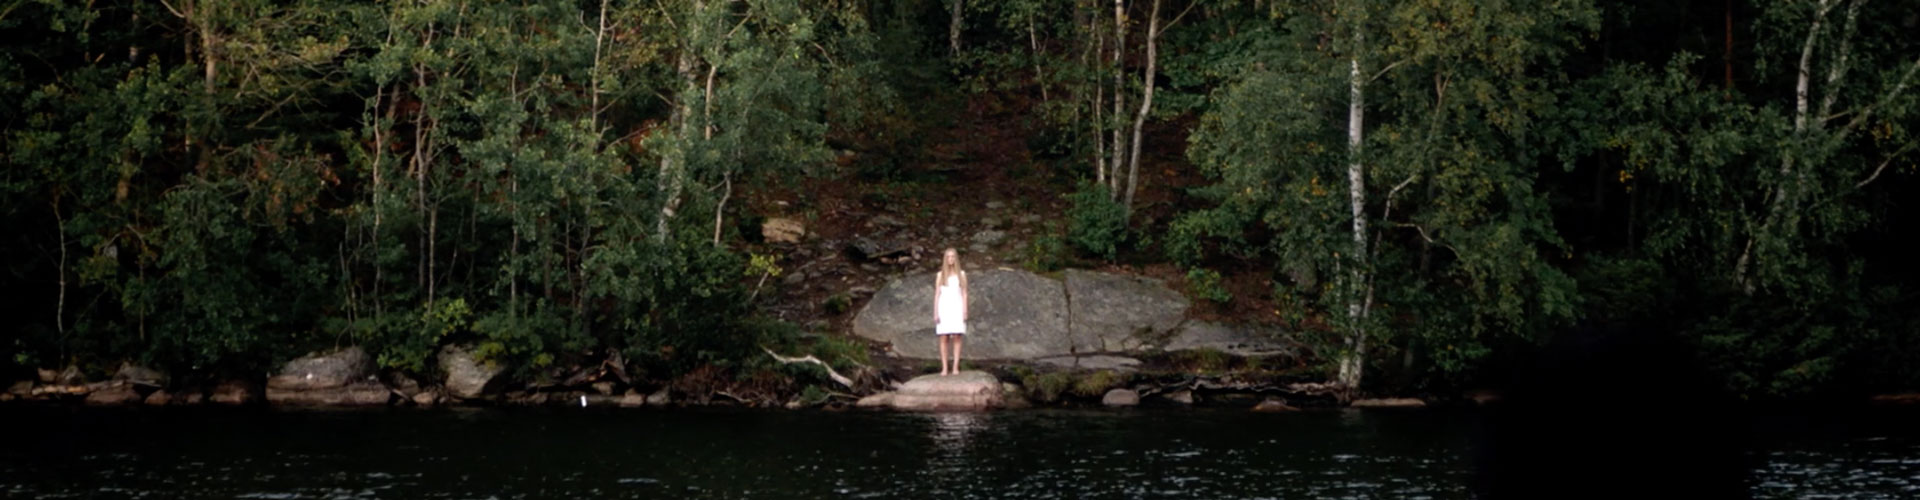 woman standing at lake